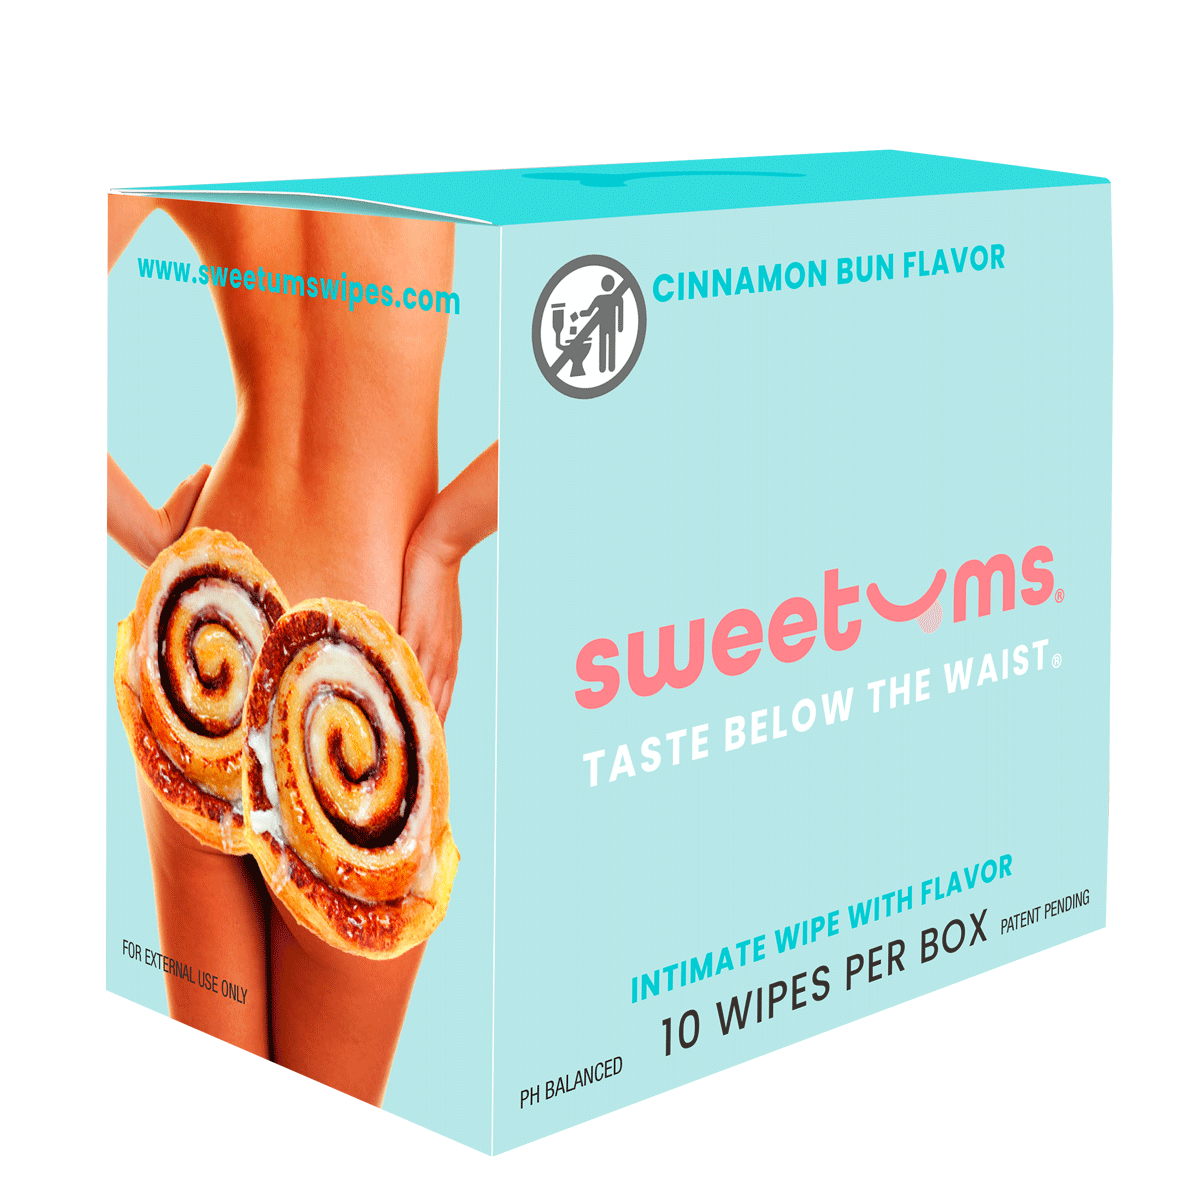 Sweetums Feminine intimate wipes - Cinnamon Bun Flavor